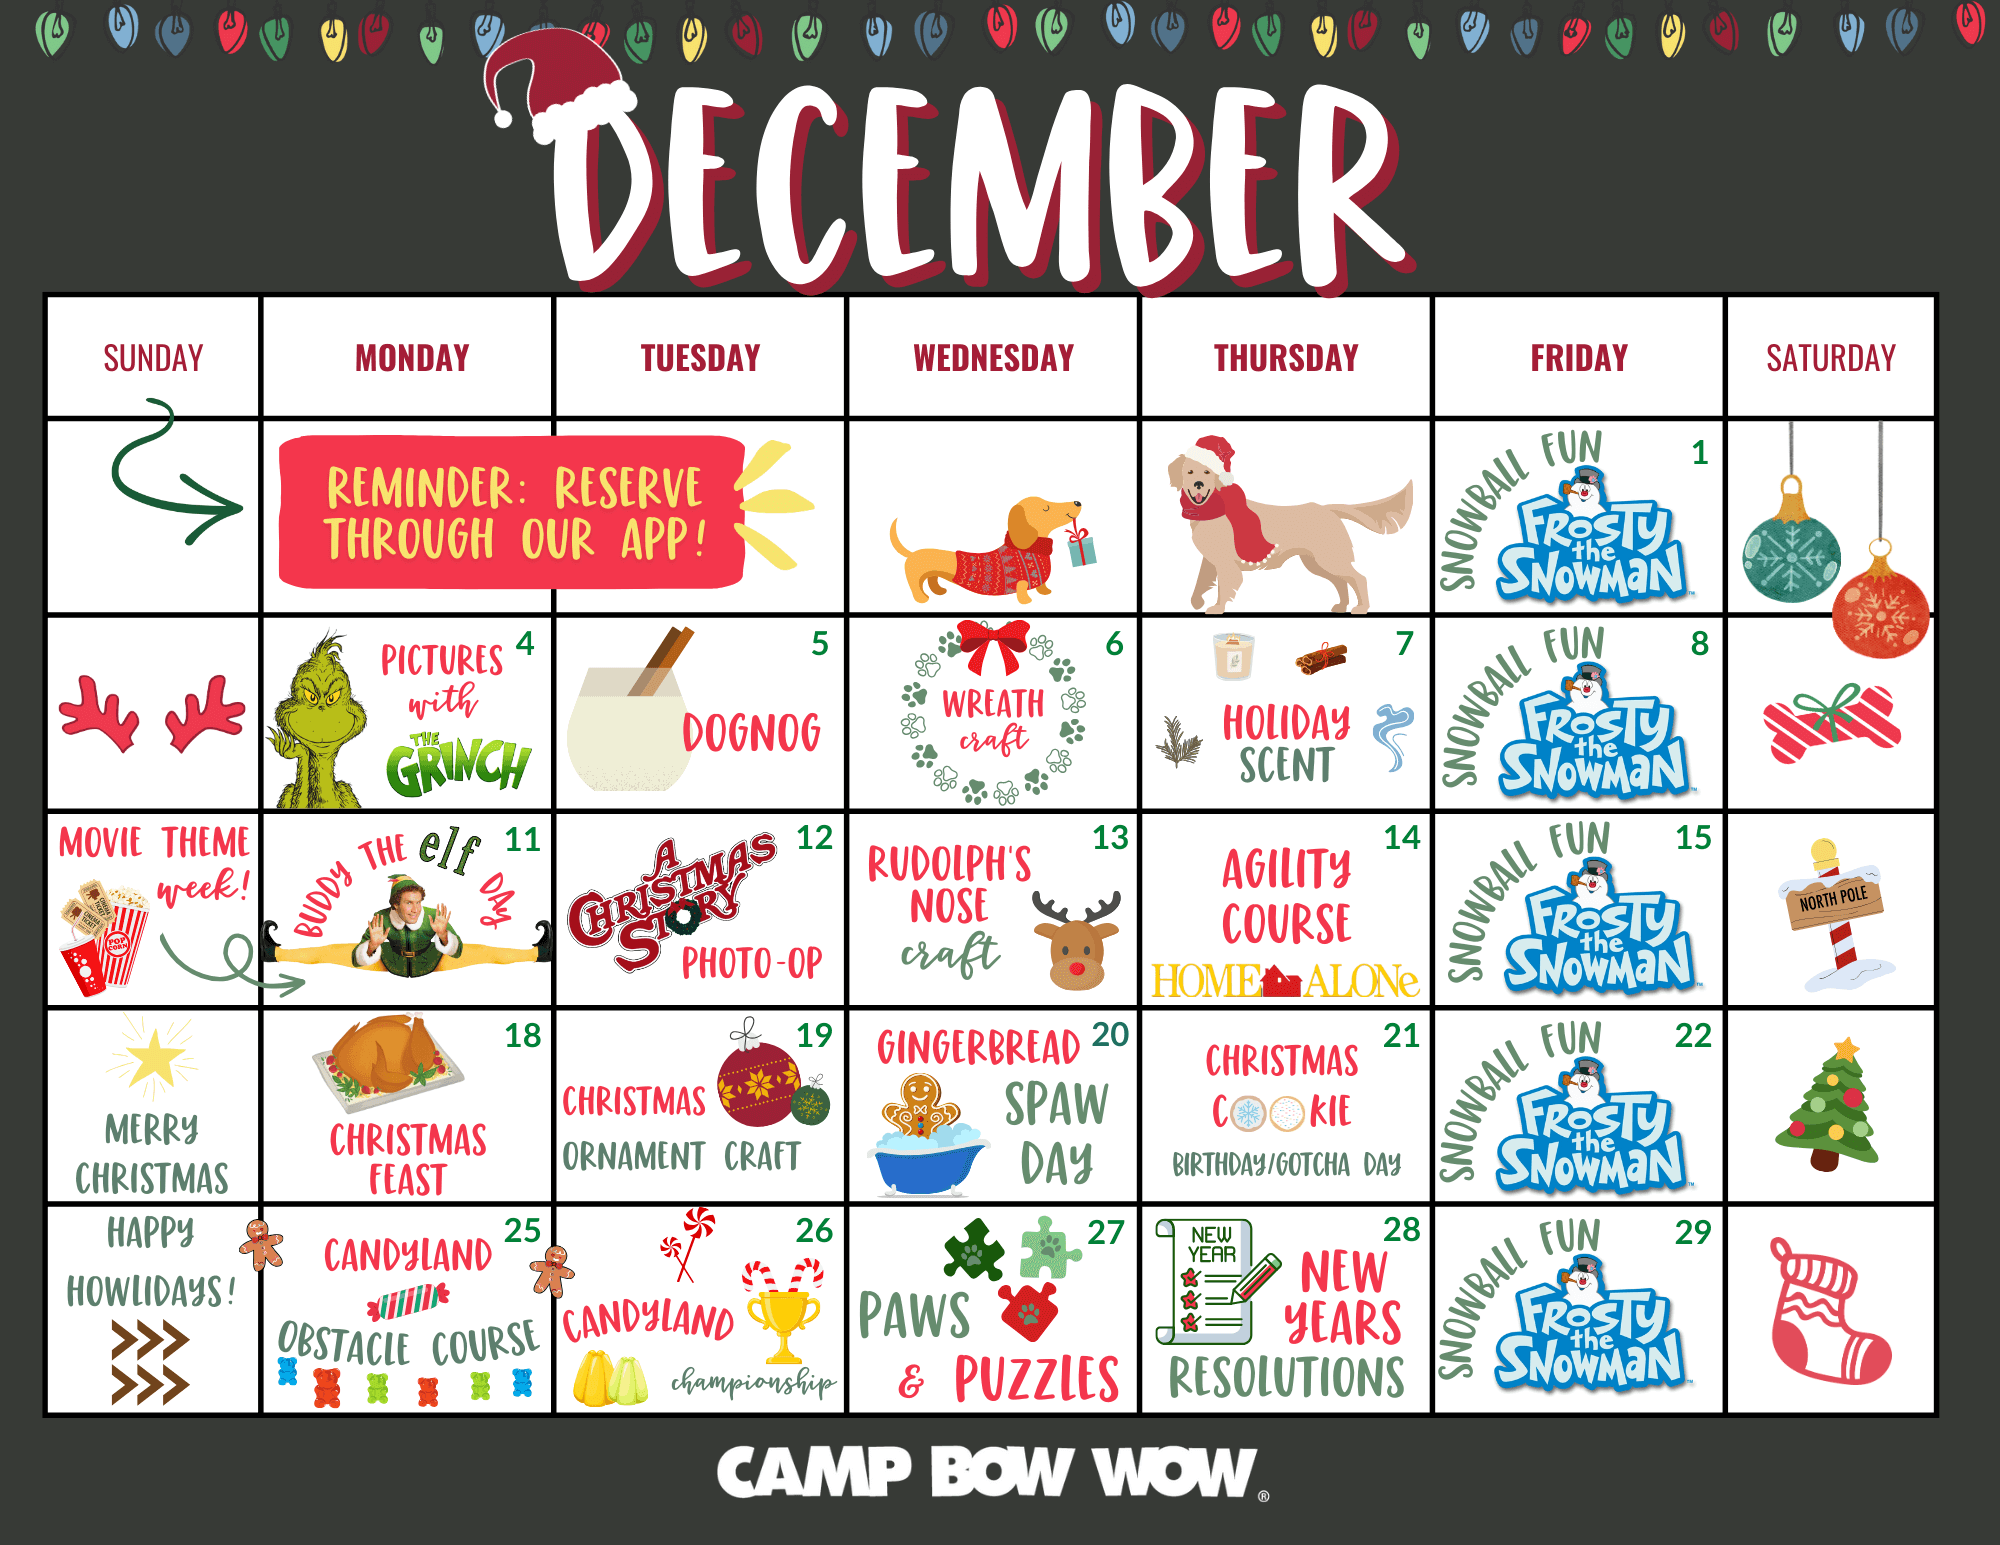 Camp Bow Wow December events calendar